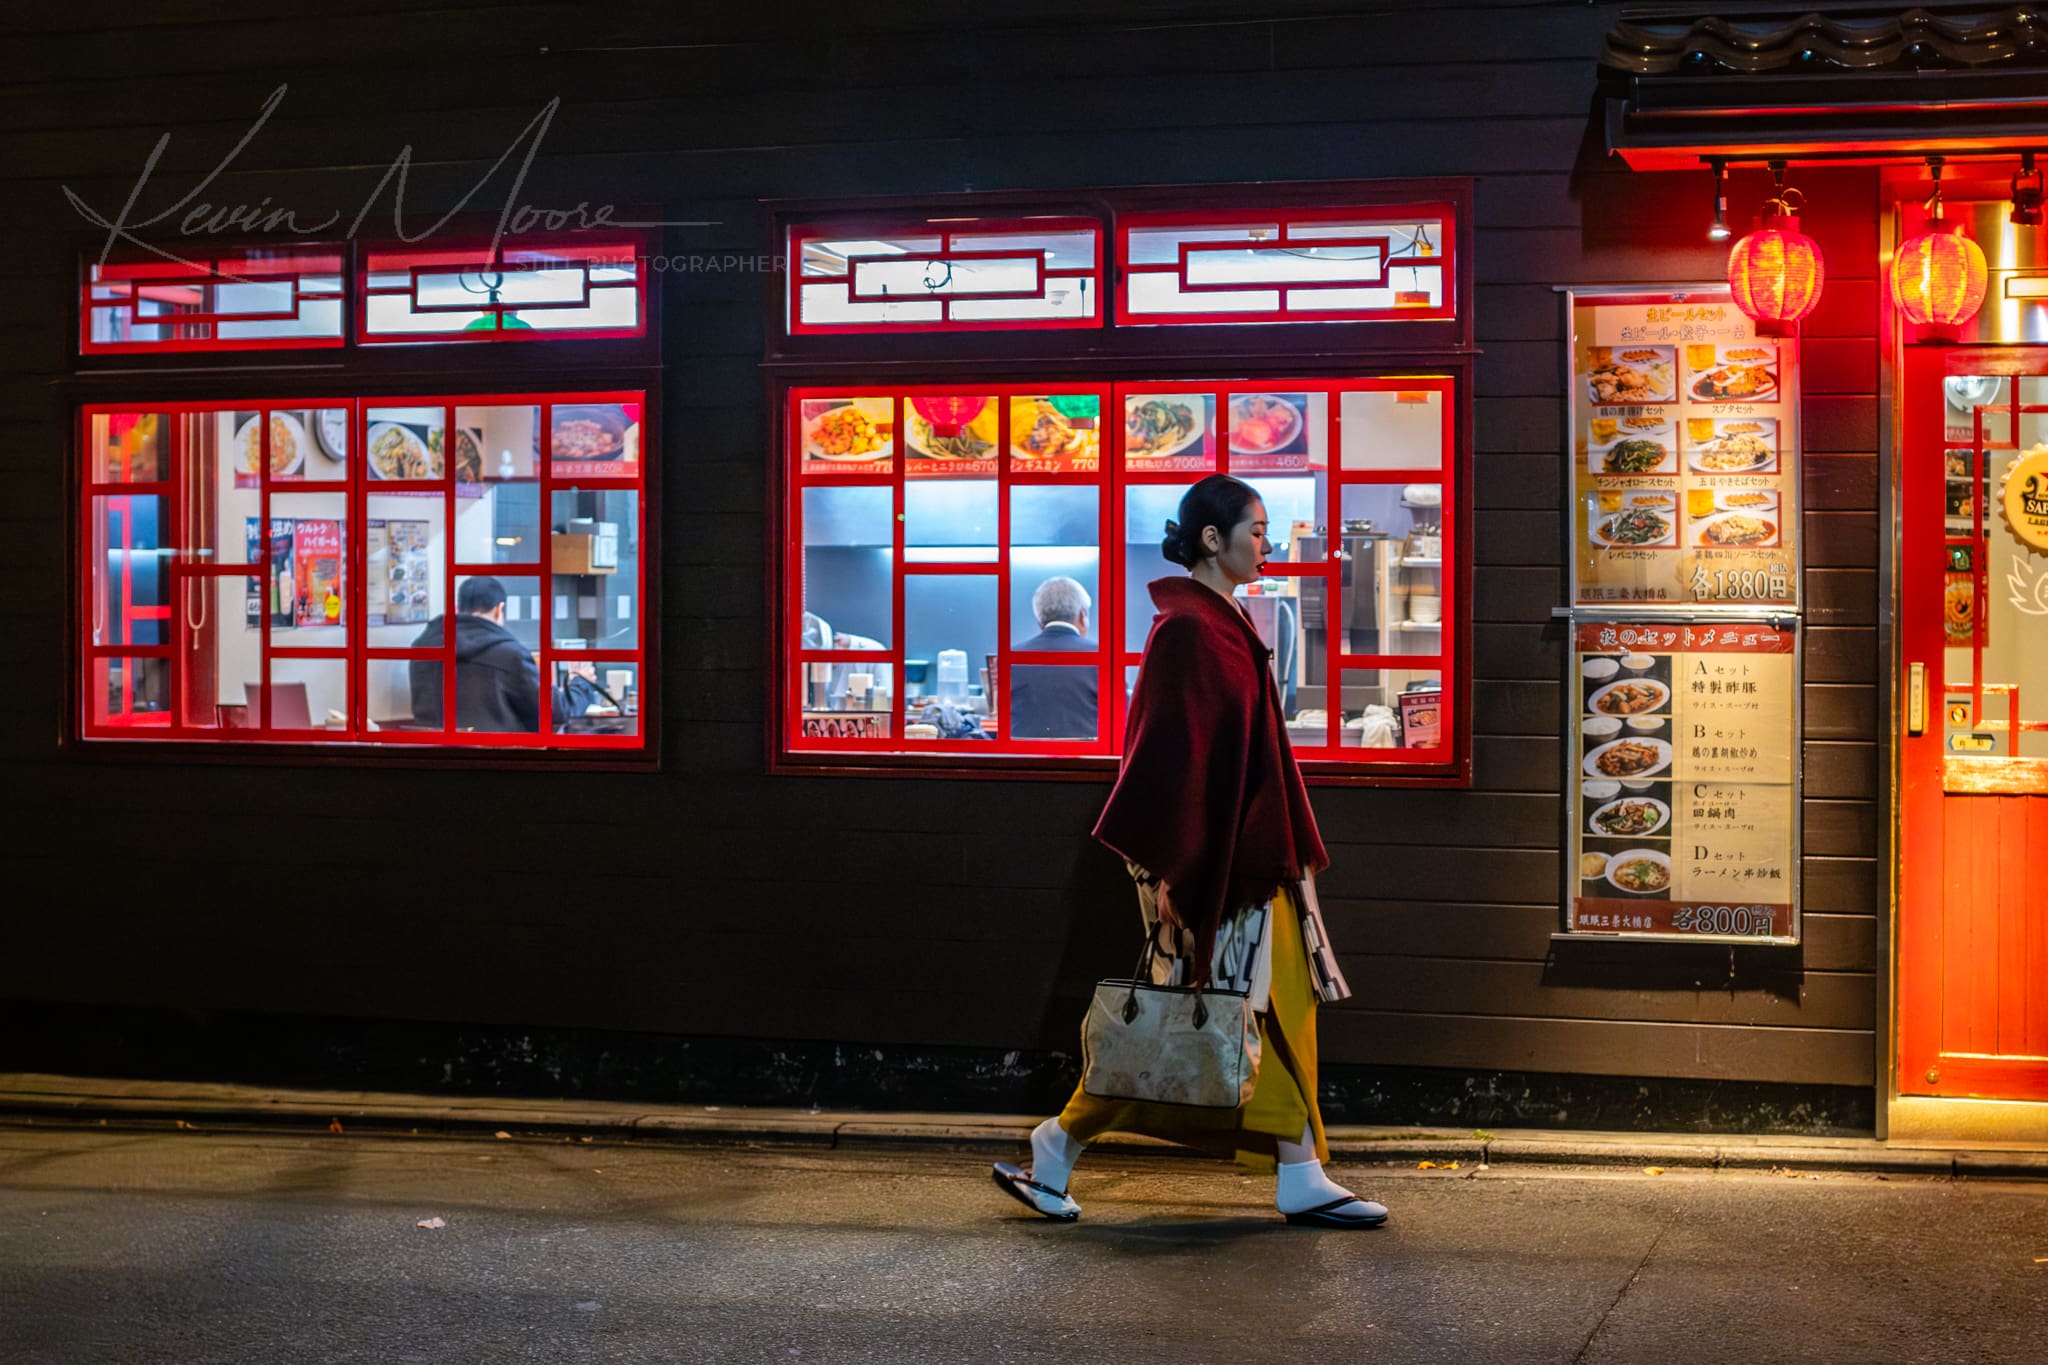 Kyoto woman in kimono passing a vibrant Chinese restaurant on a rainy urban night.